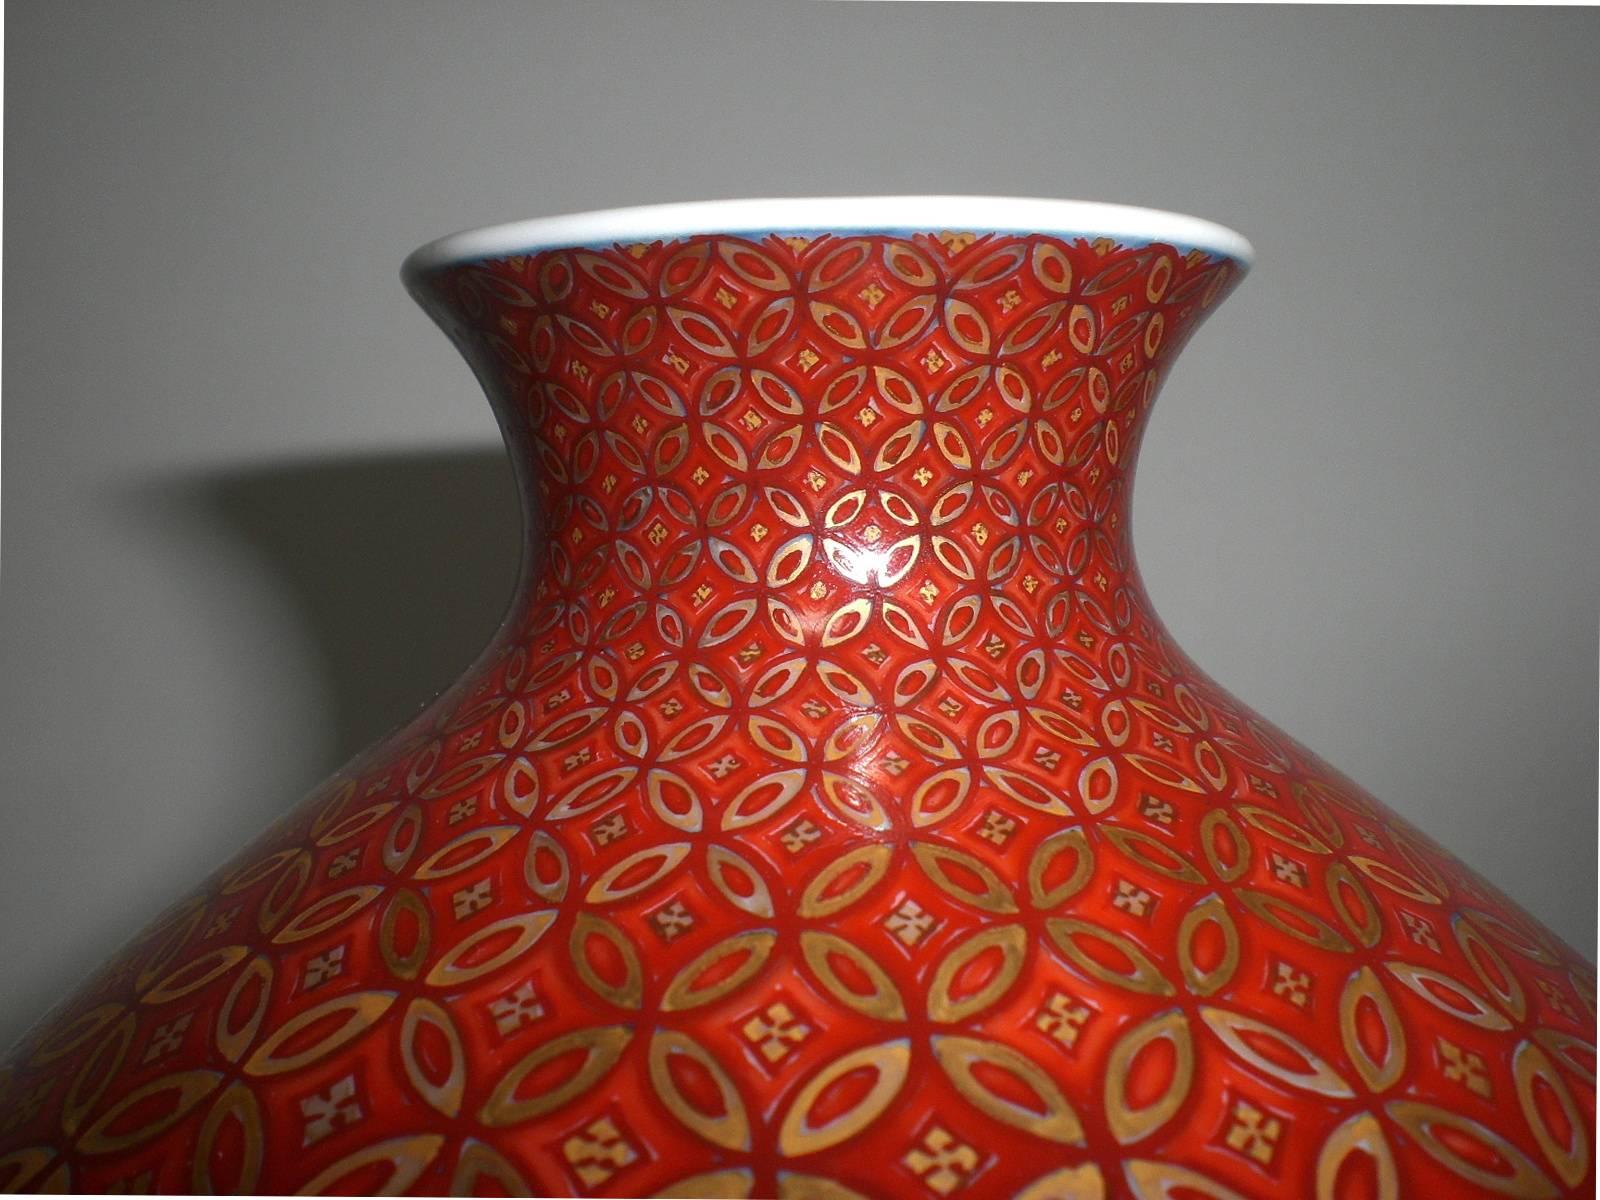 Gilt Japanese Contemporary Red Gold Porcelain Vase by Master Artist